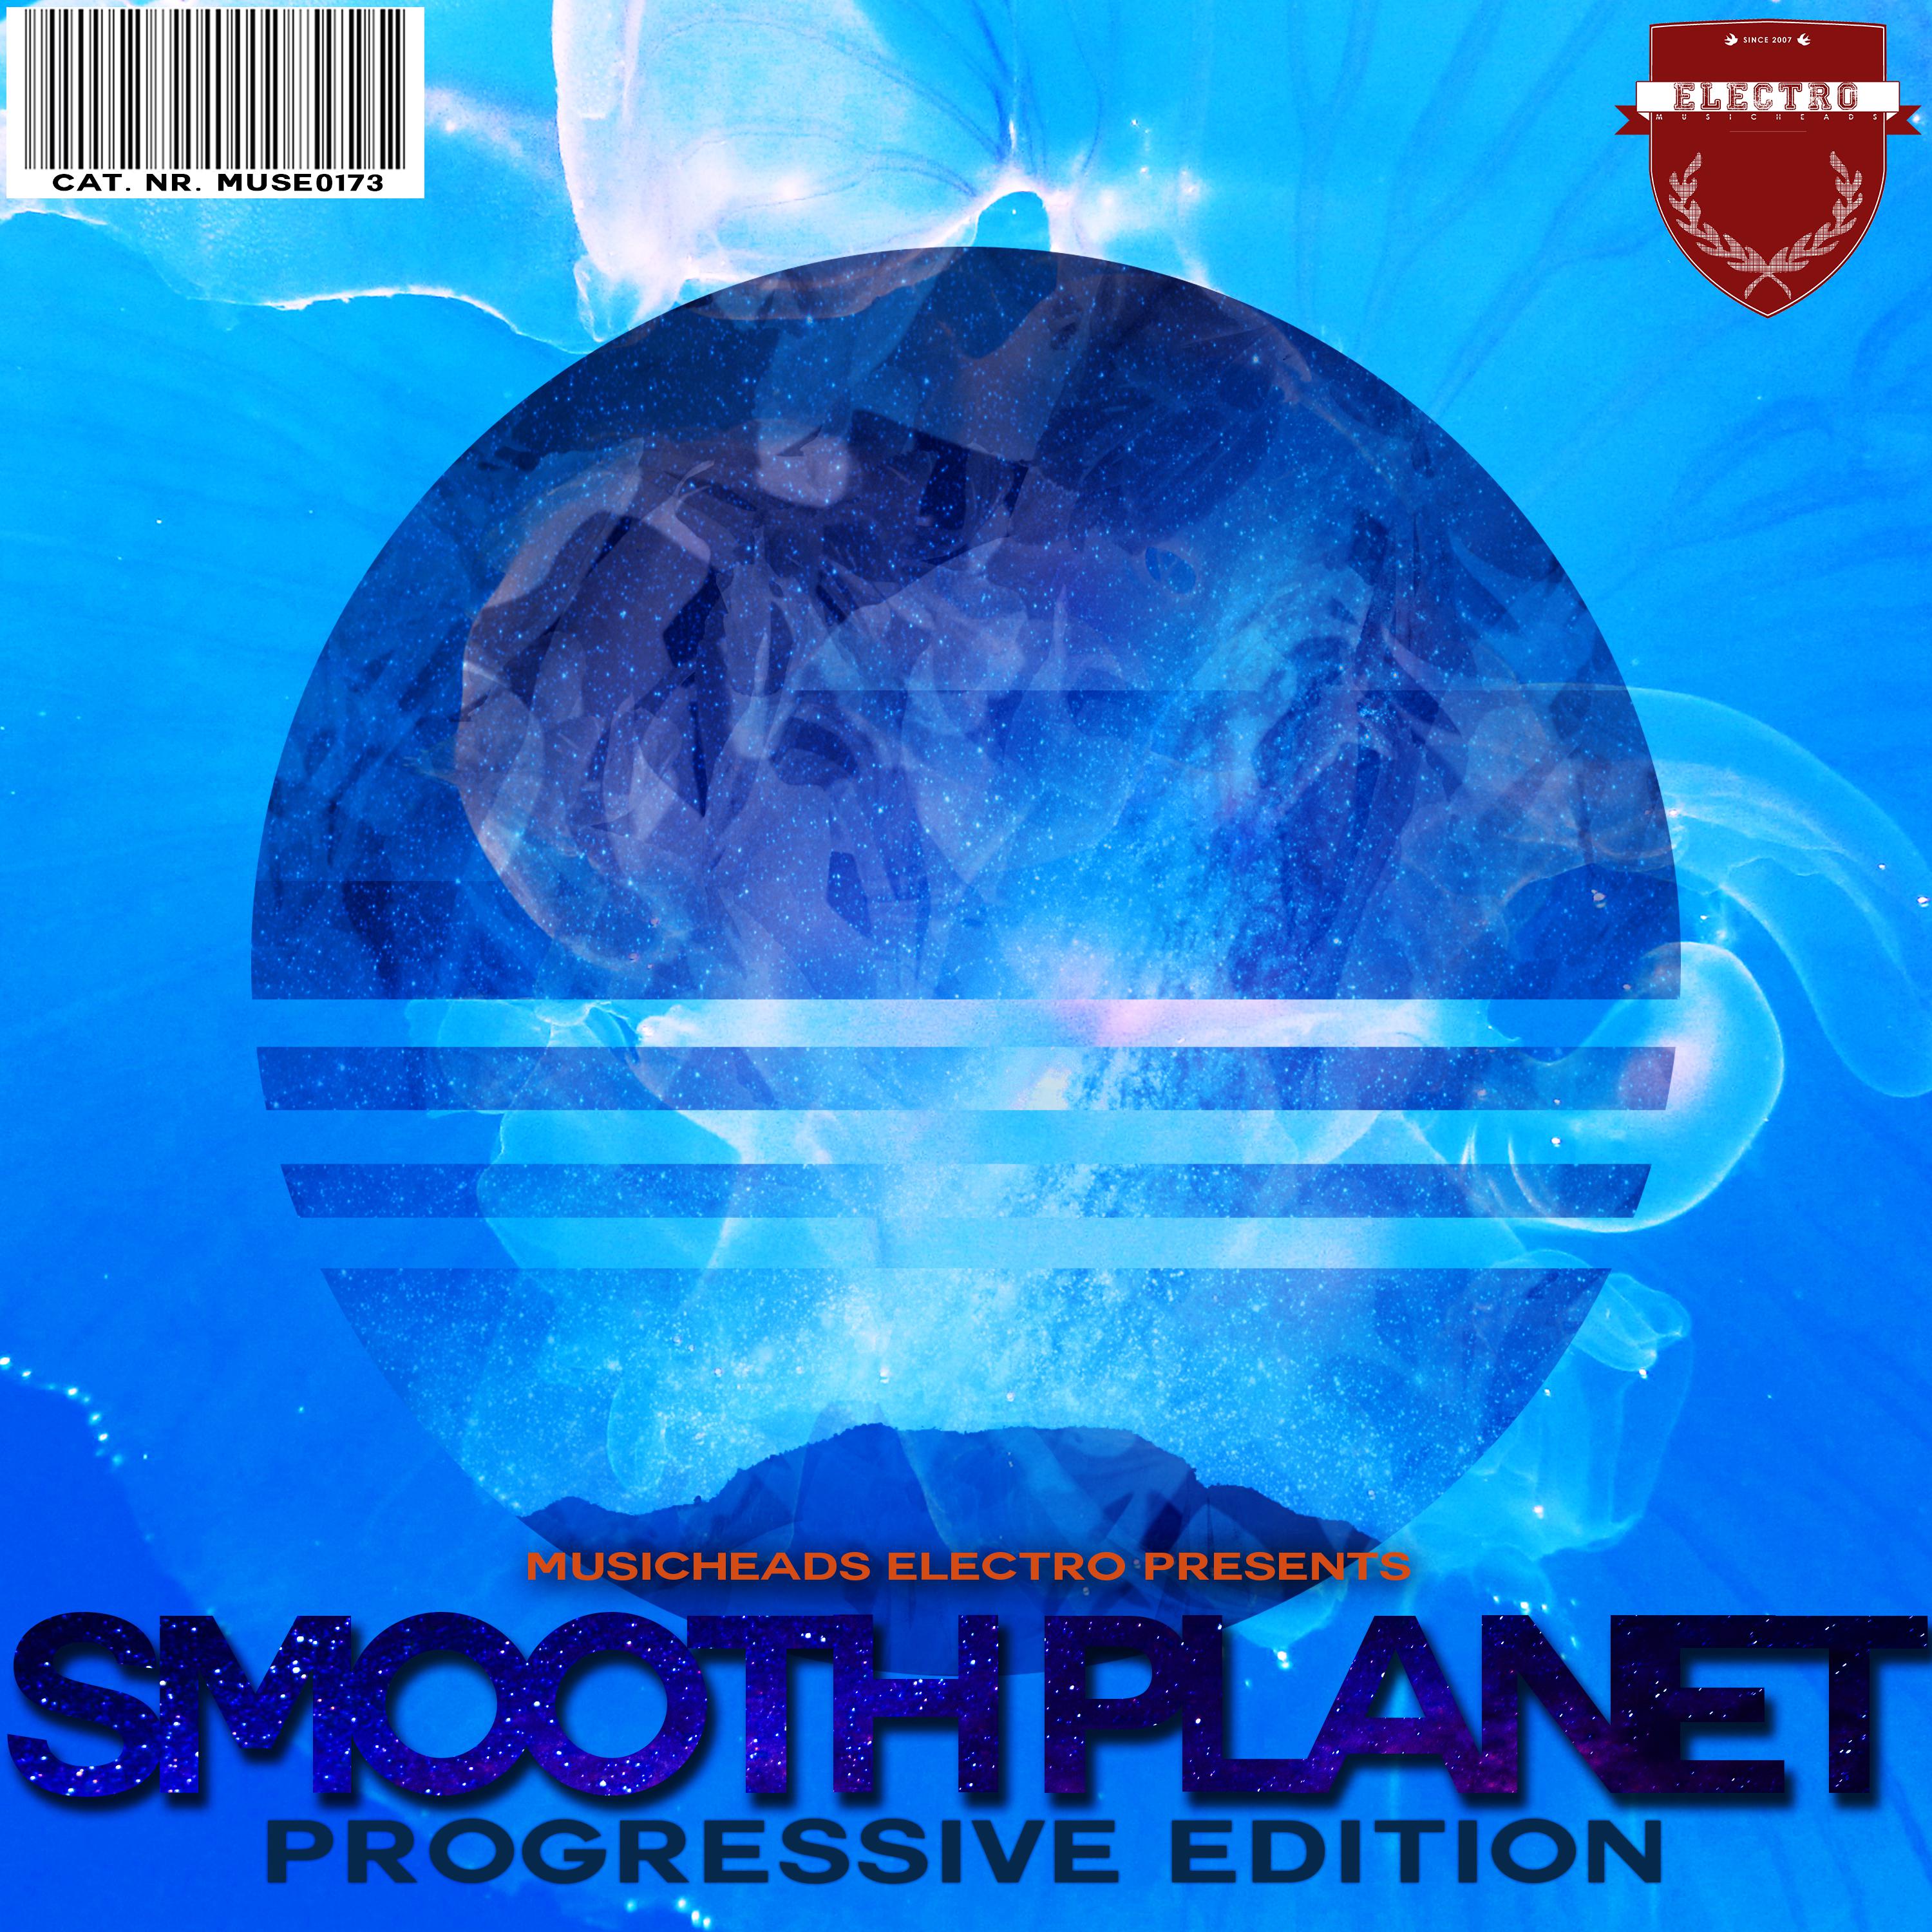 Smooth Planet - Progressive Edition